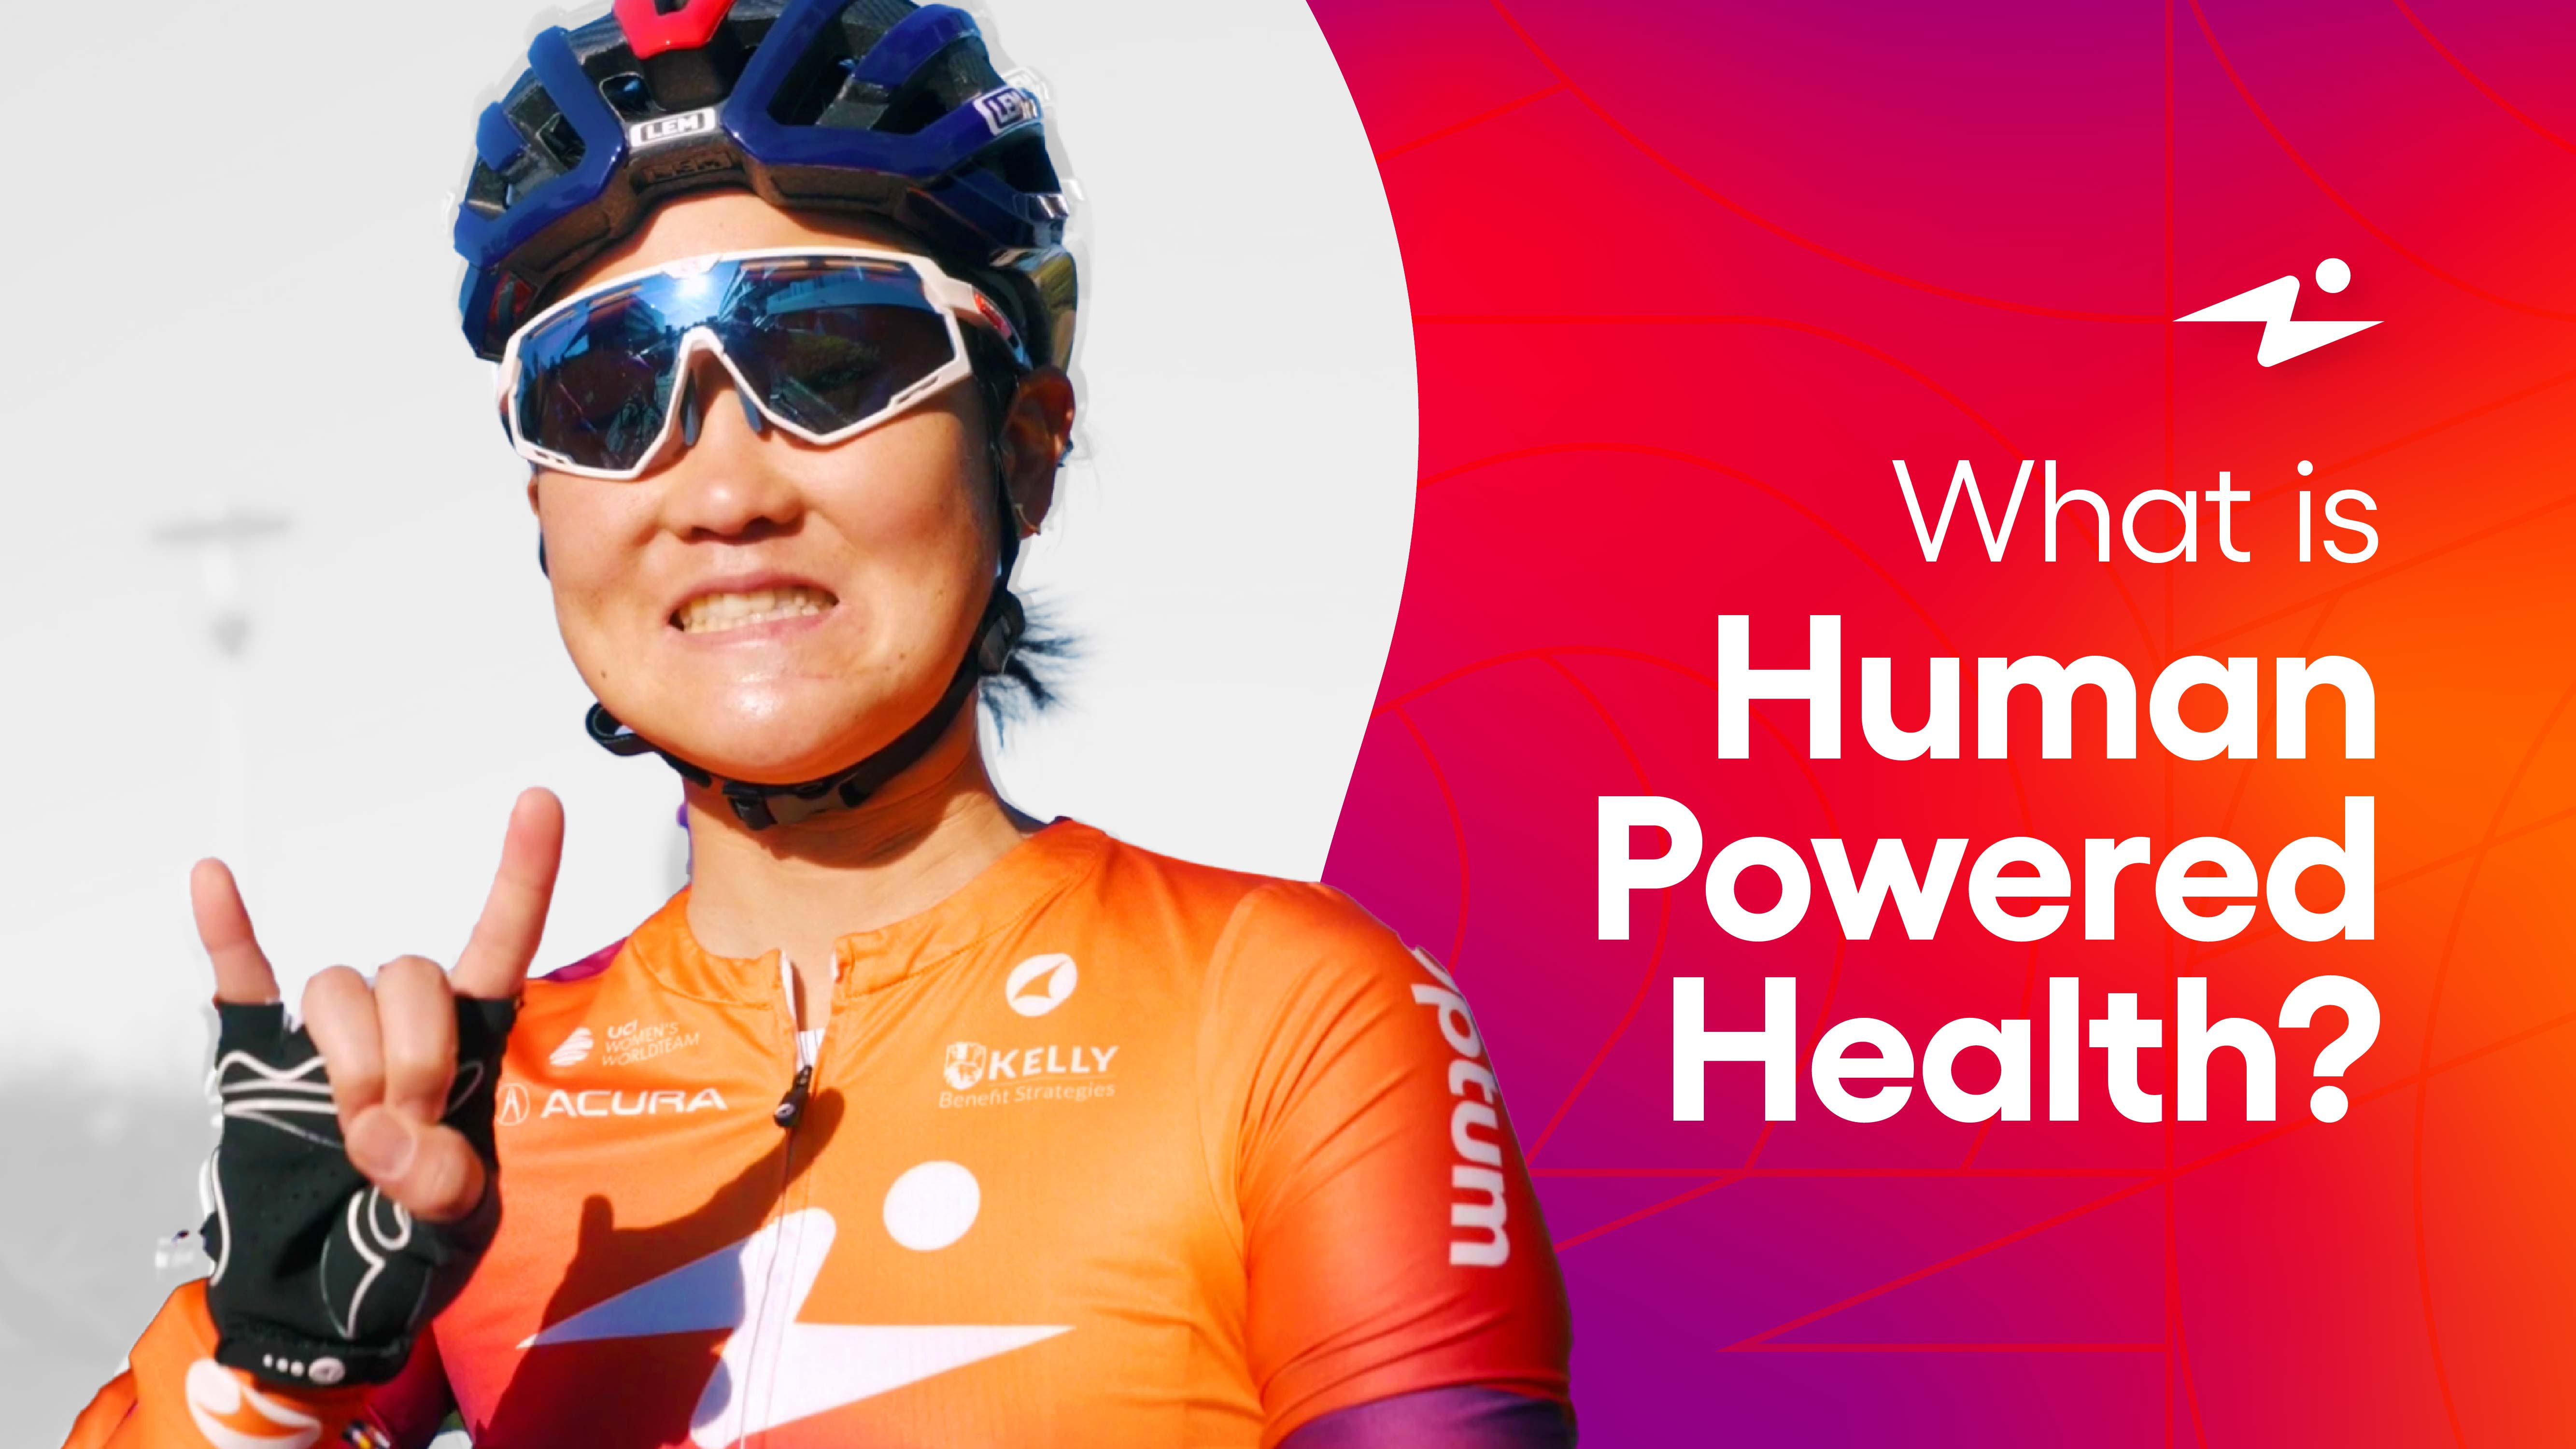 What is Human Powered Health? – Human Powered Health Cycling